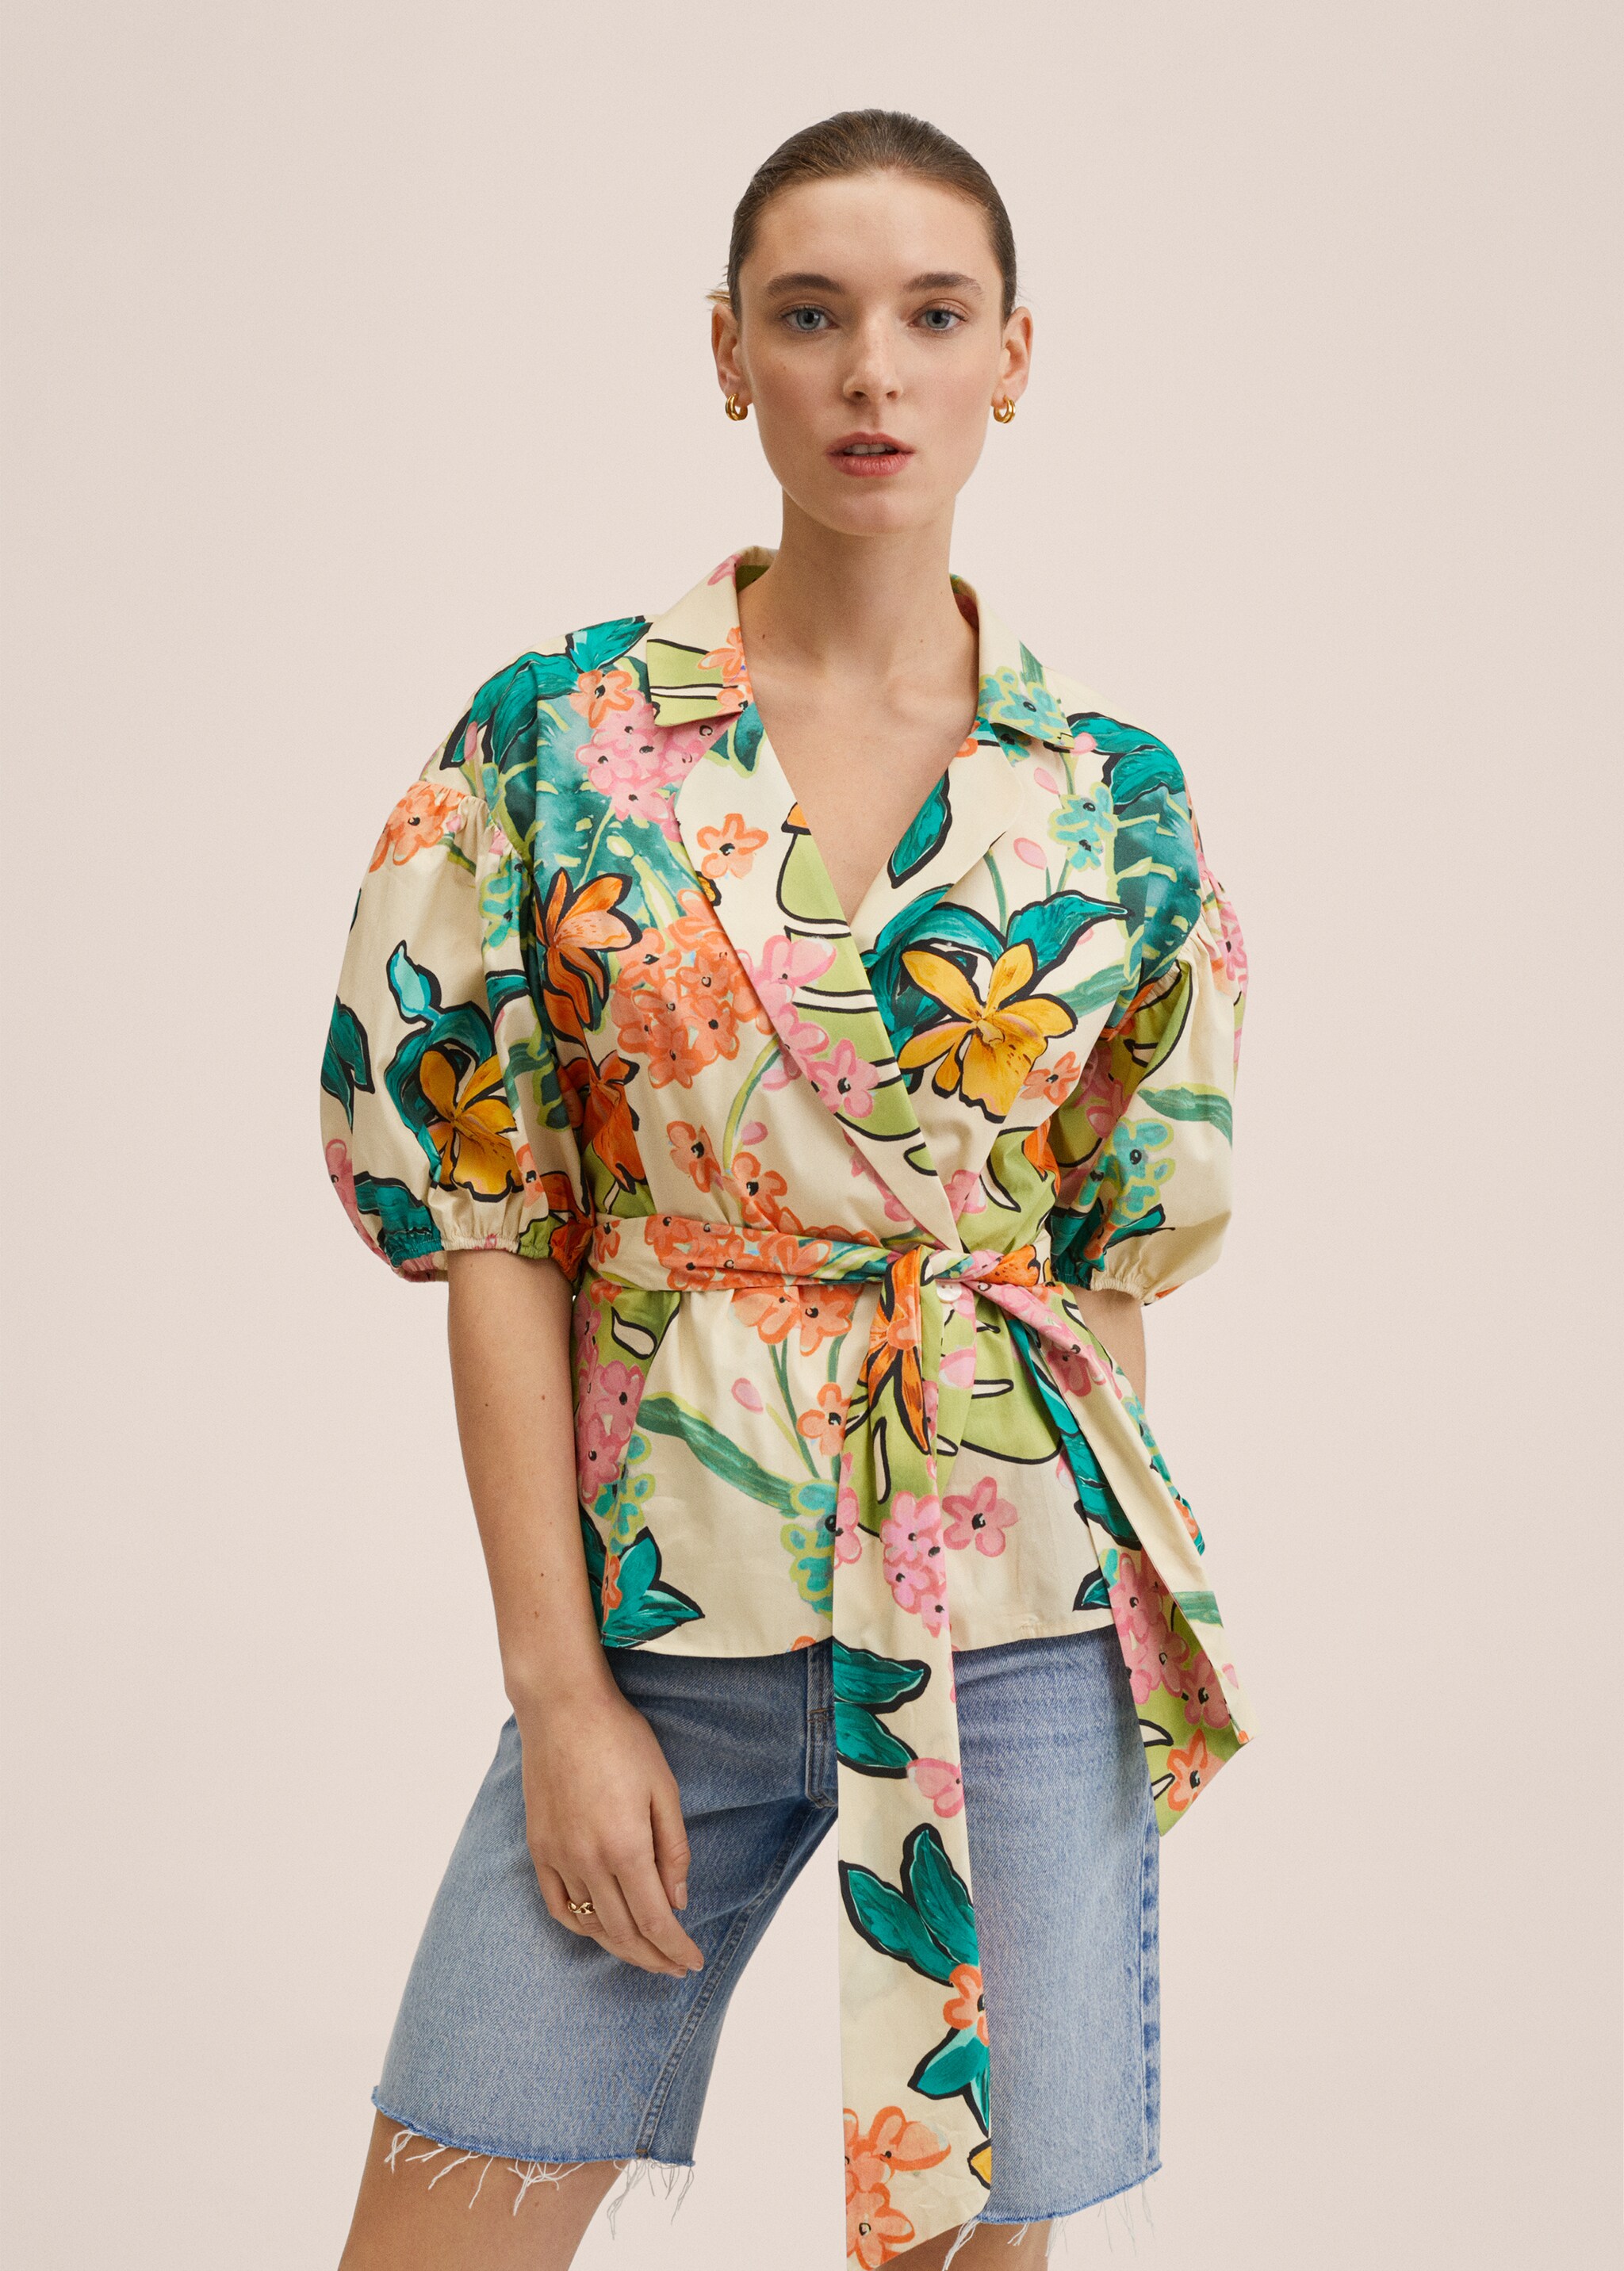 Floral print blouse - Medium plane